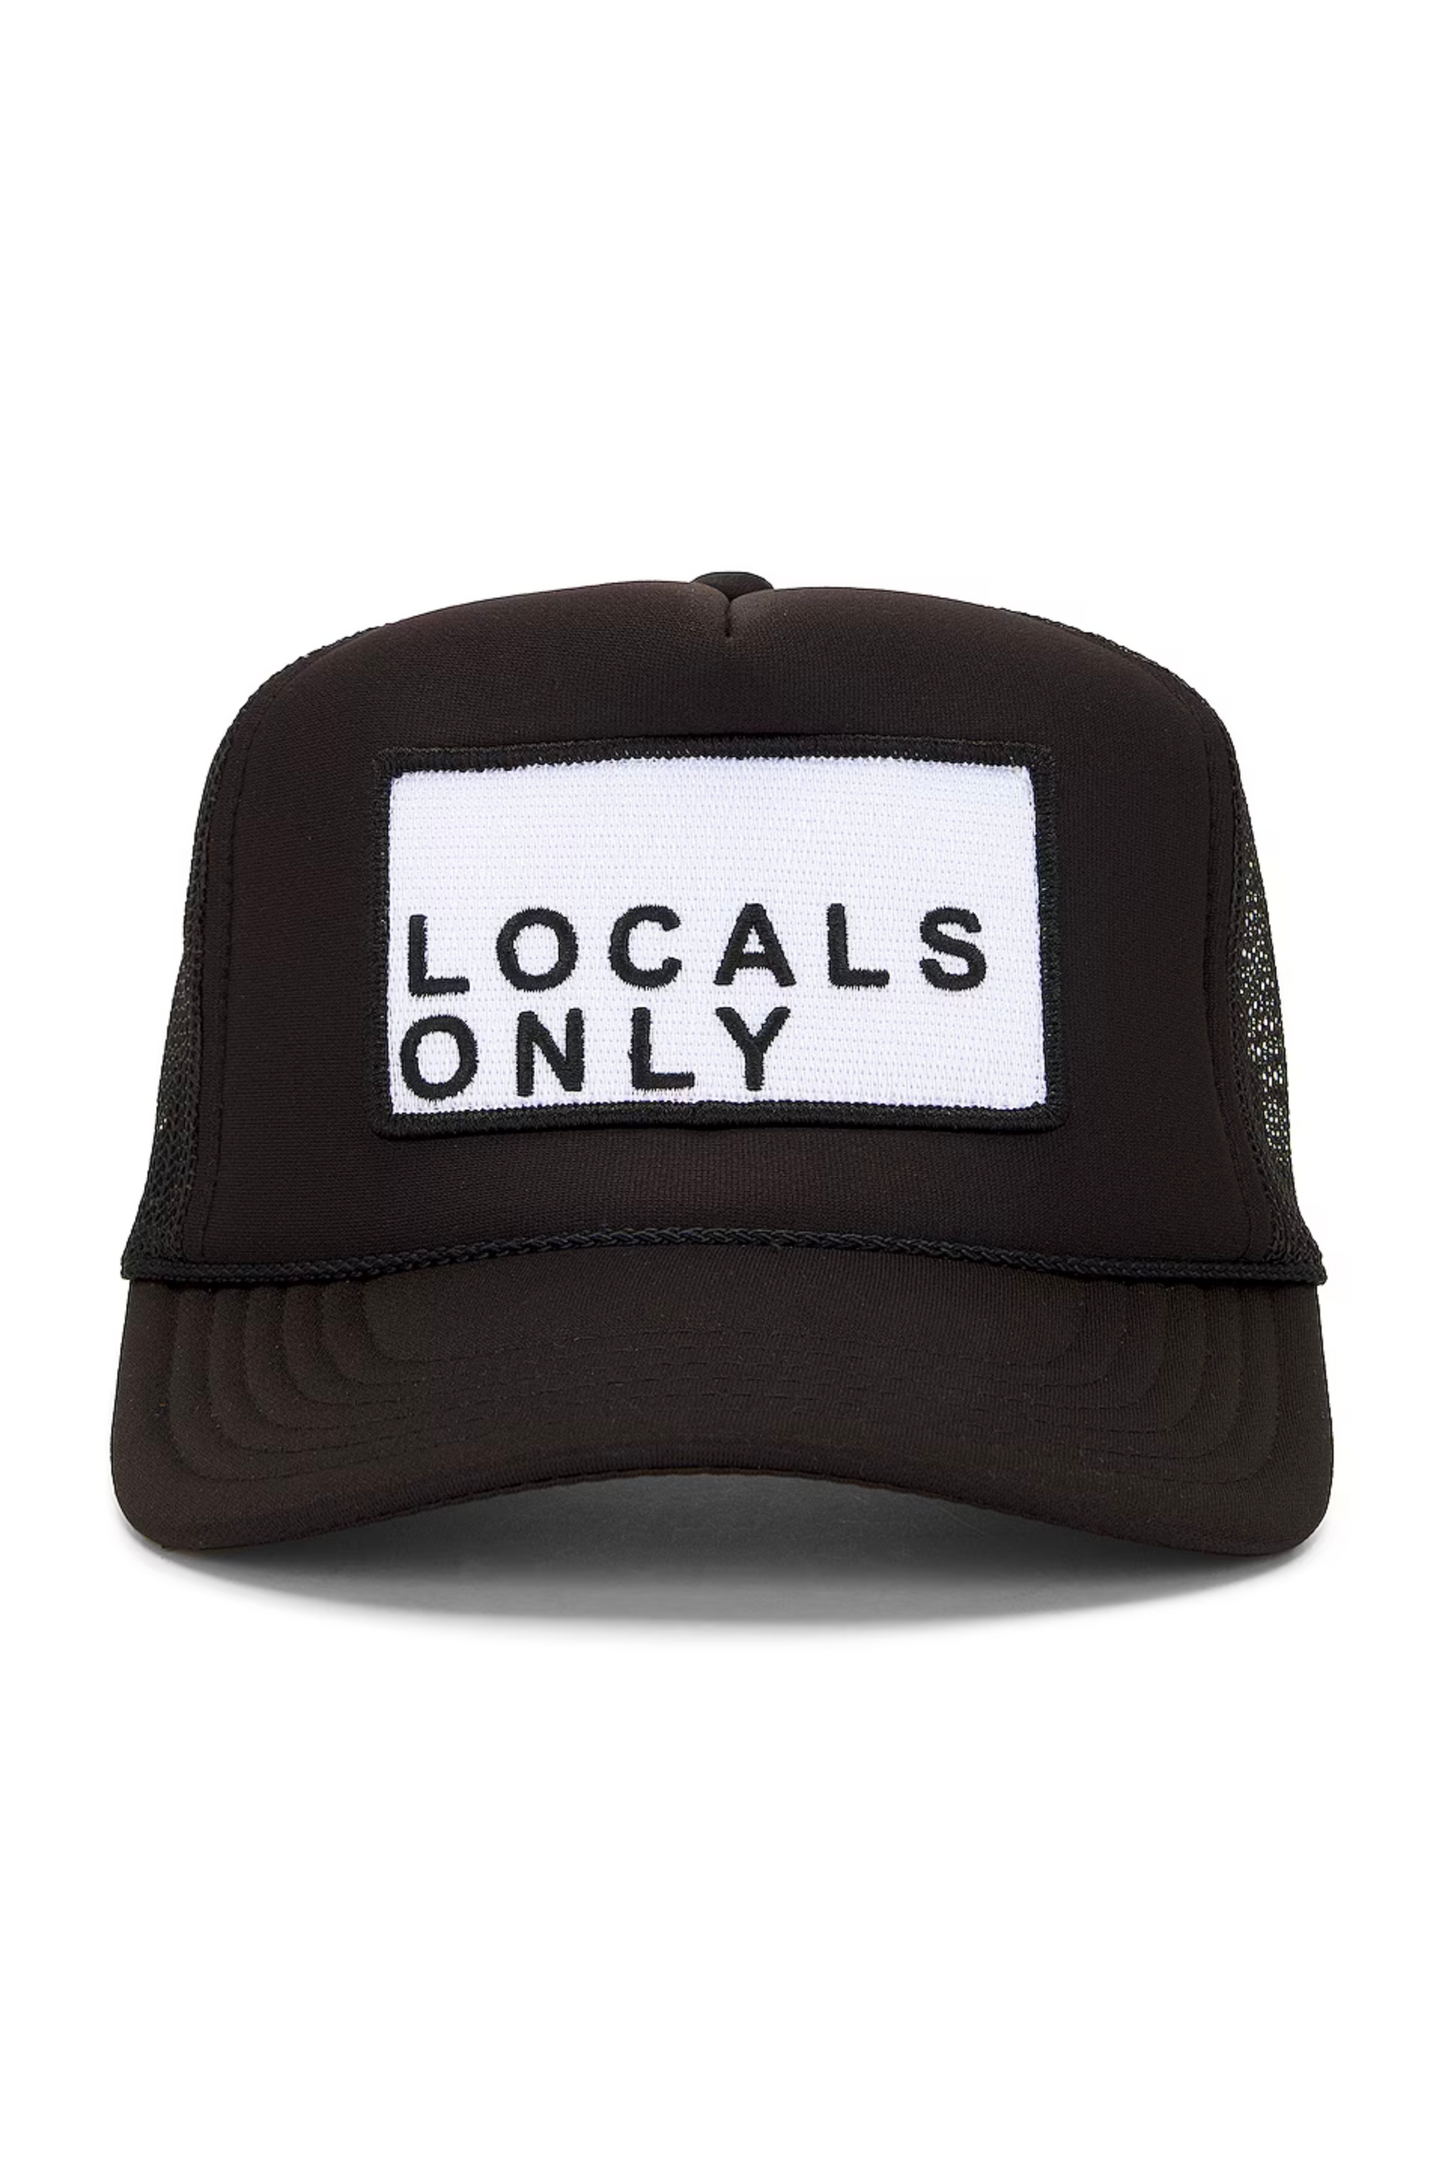 Locals Only Trucker Hat in Black – Shop Friday Feelin